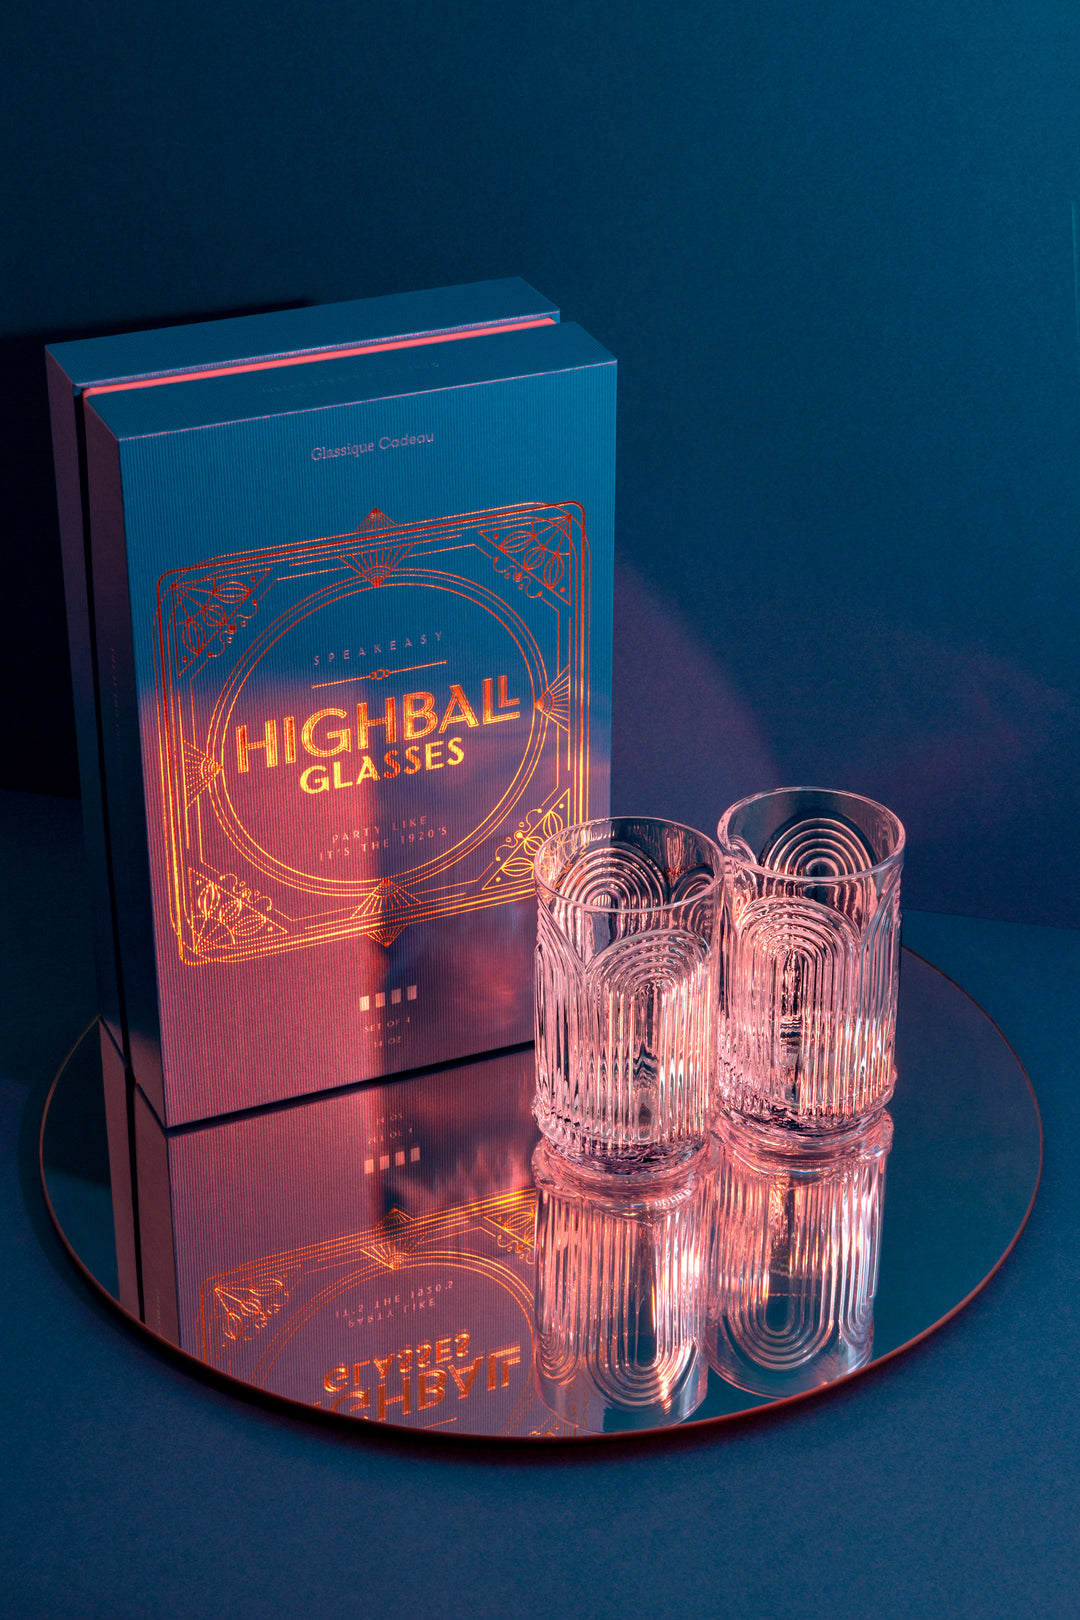 Crystal Highball Glasses Set of 4